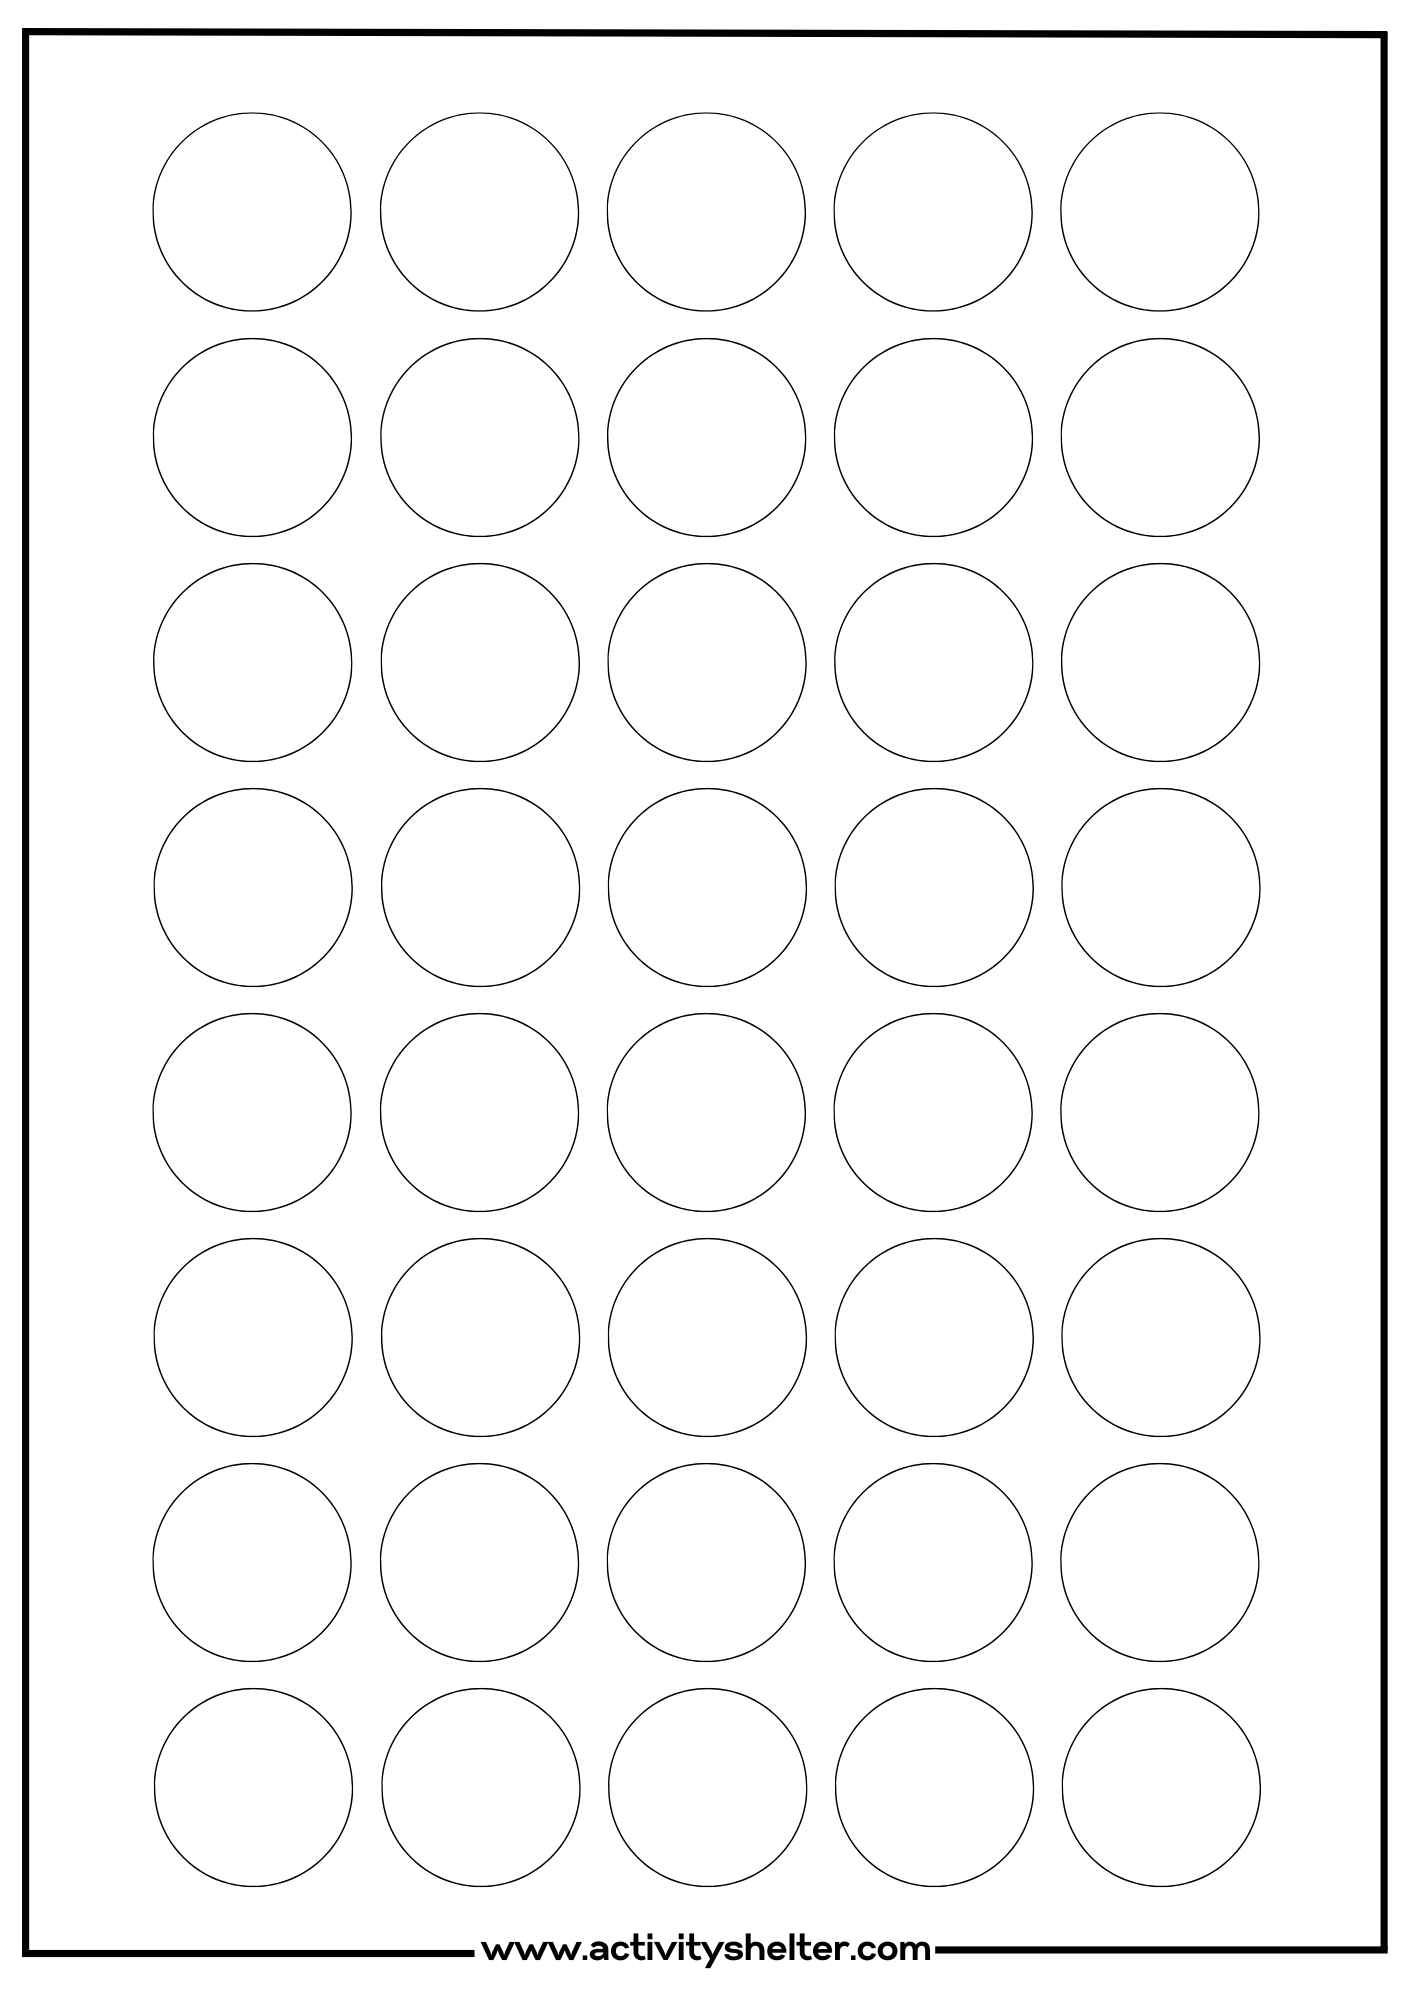 Circle Templates to Print